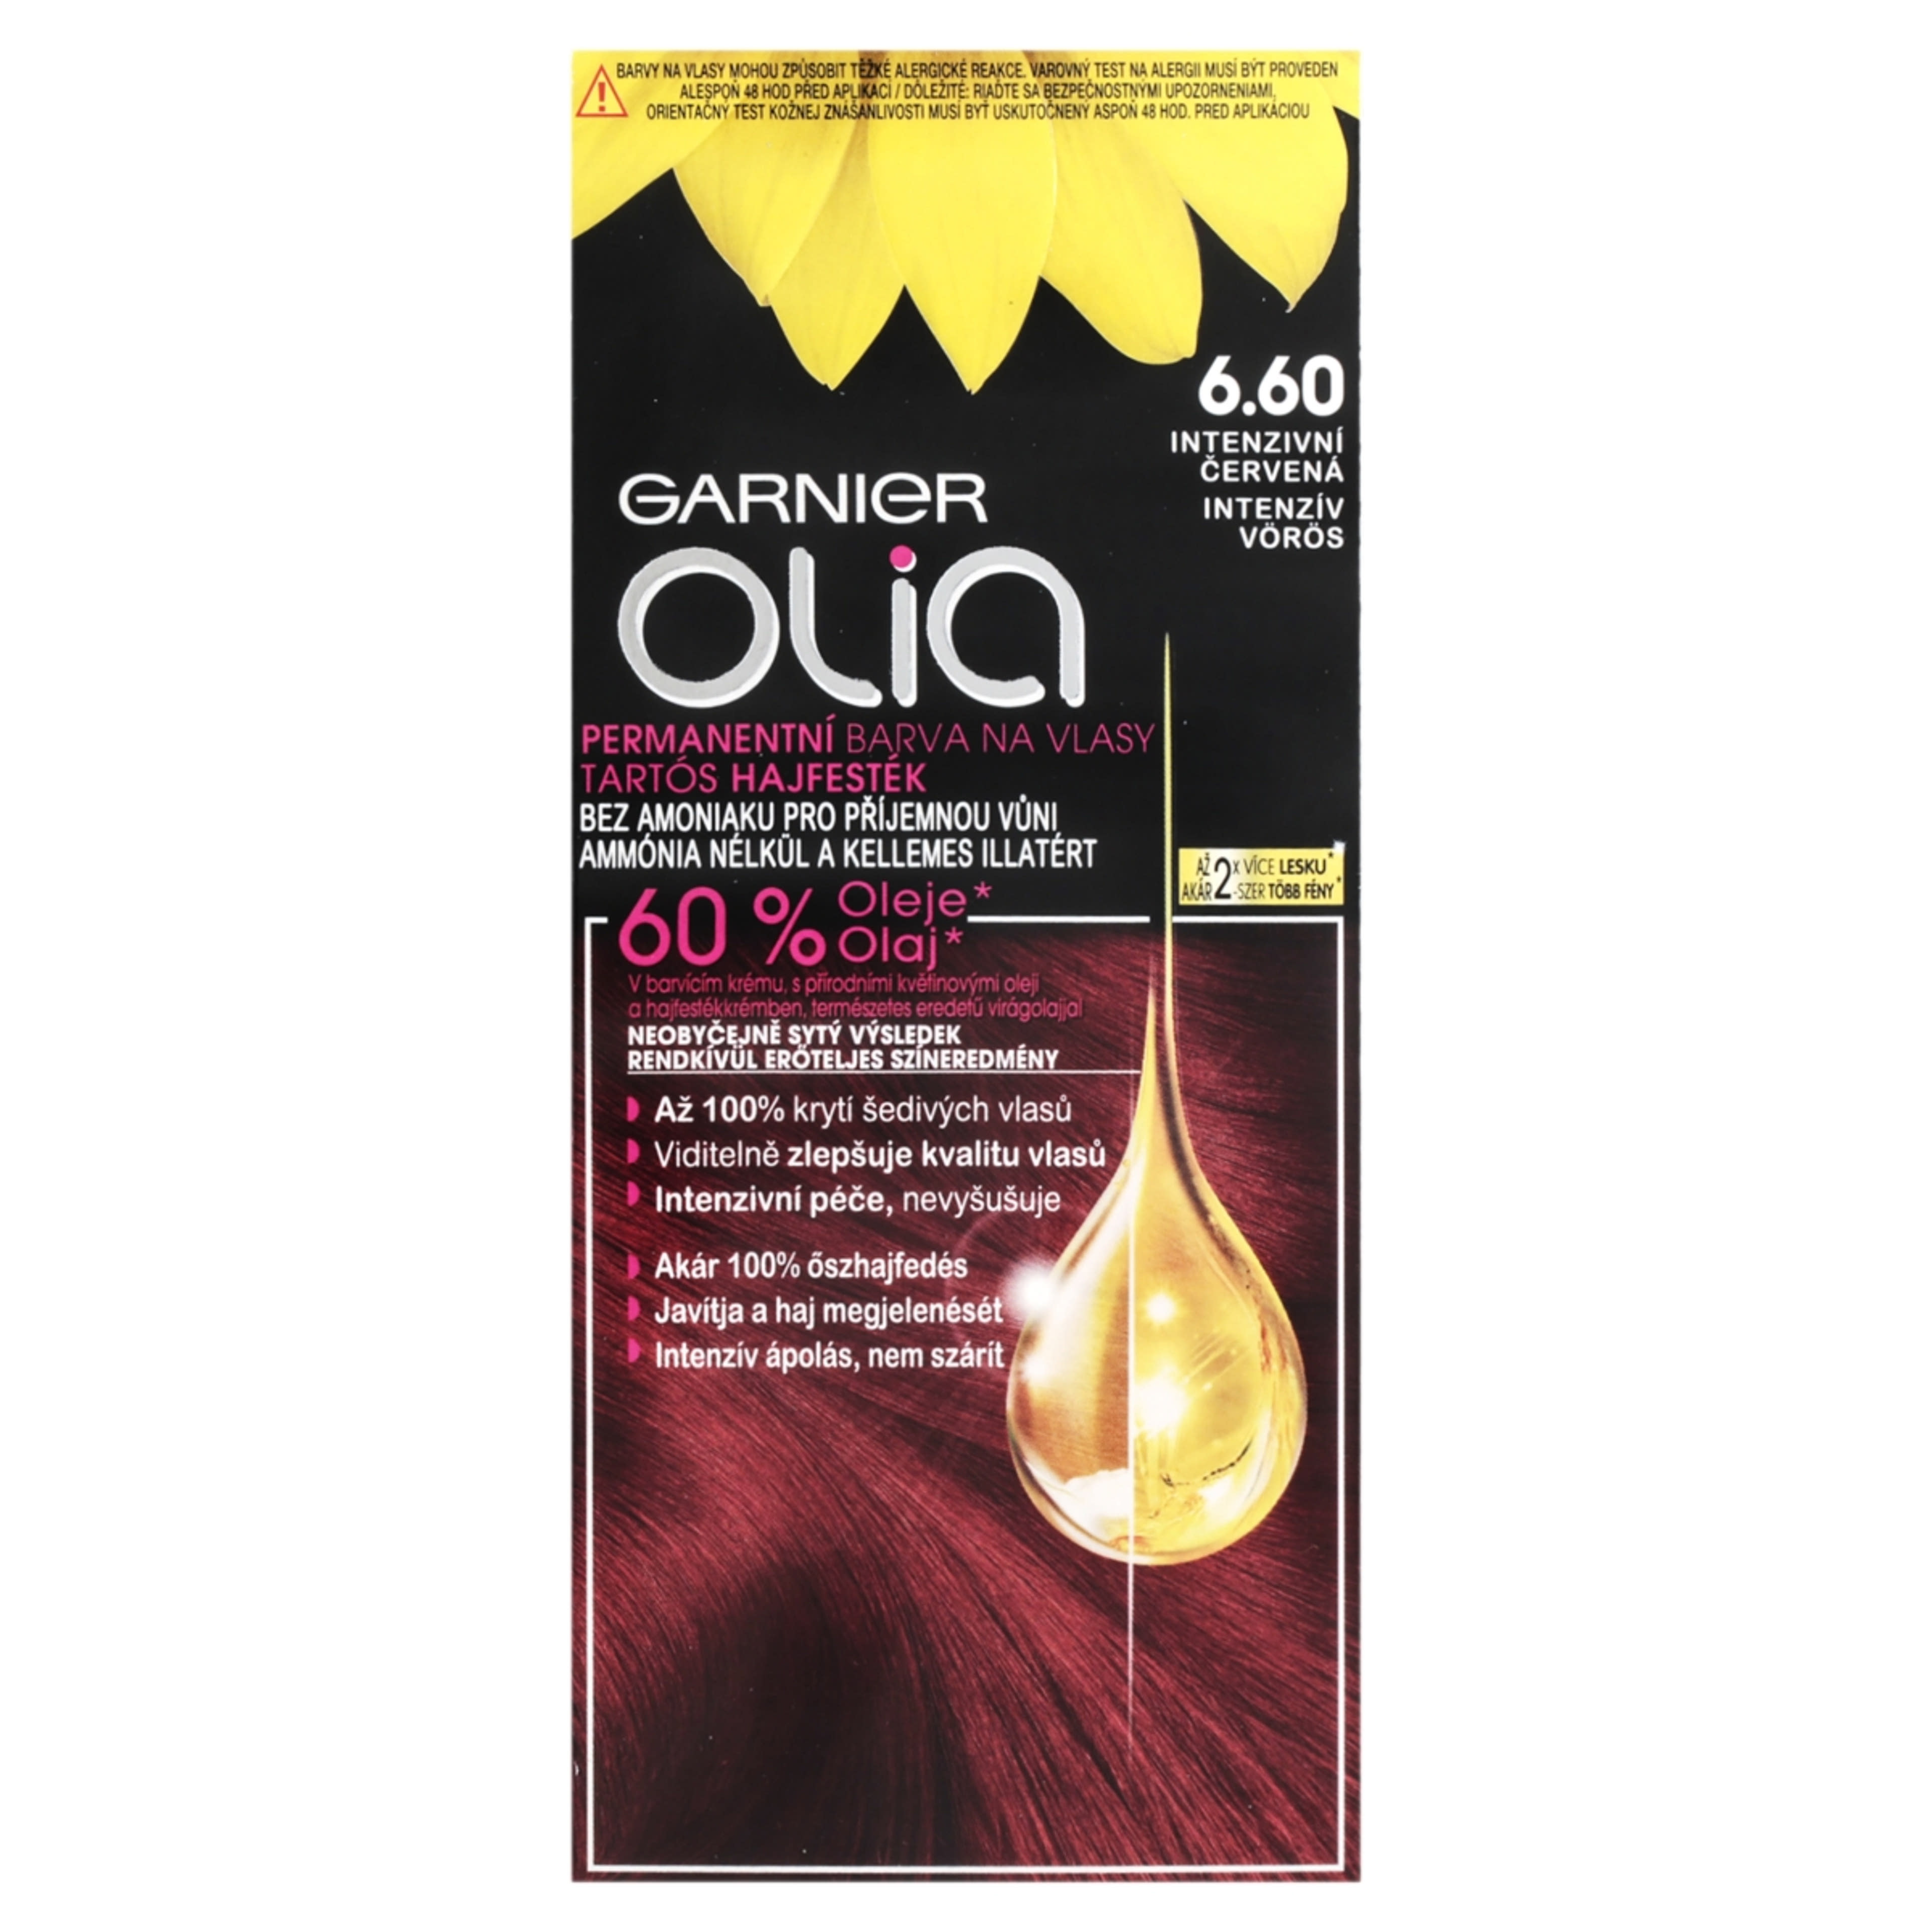 Garnier Olia tartós hajfesték 6.60 Intenzív vörös - 1 db